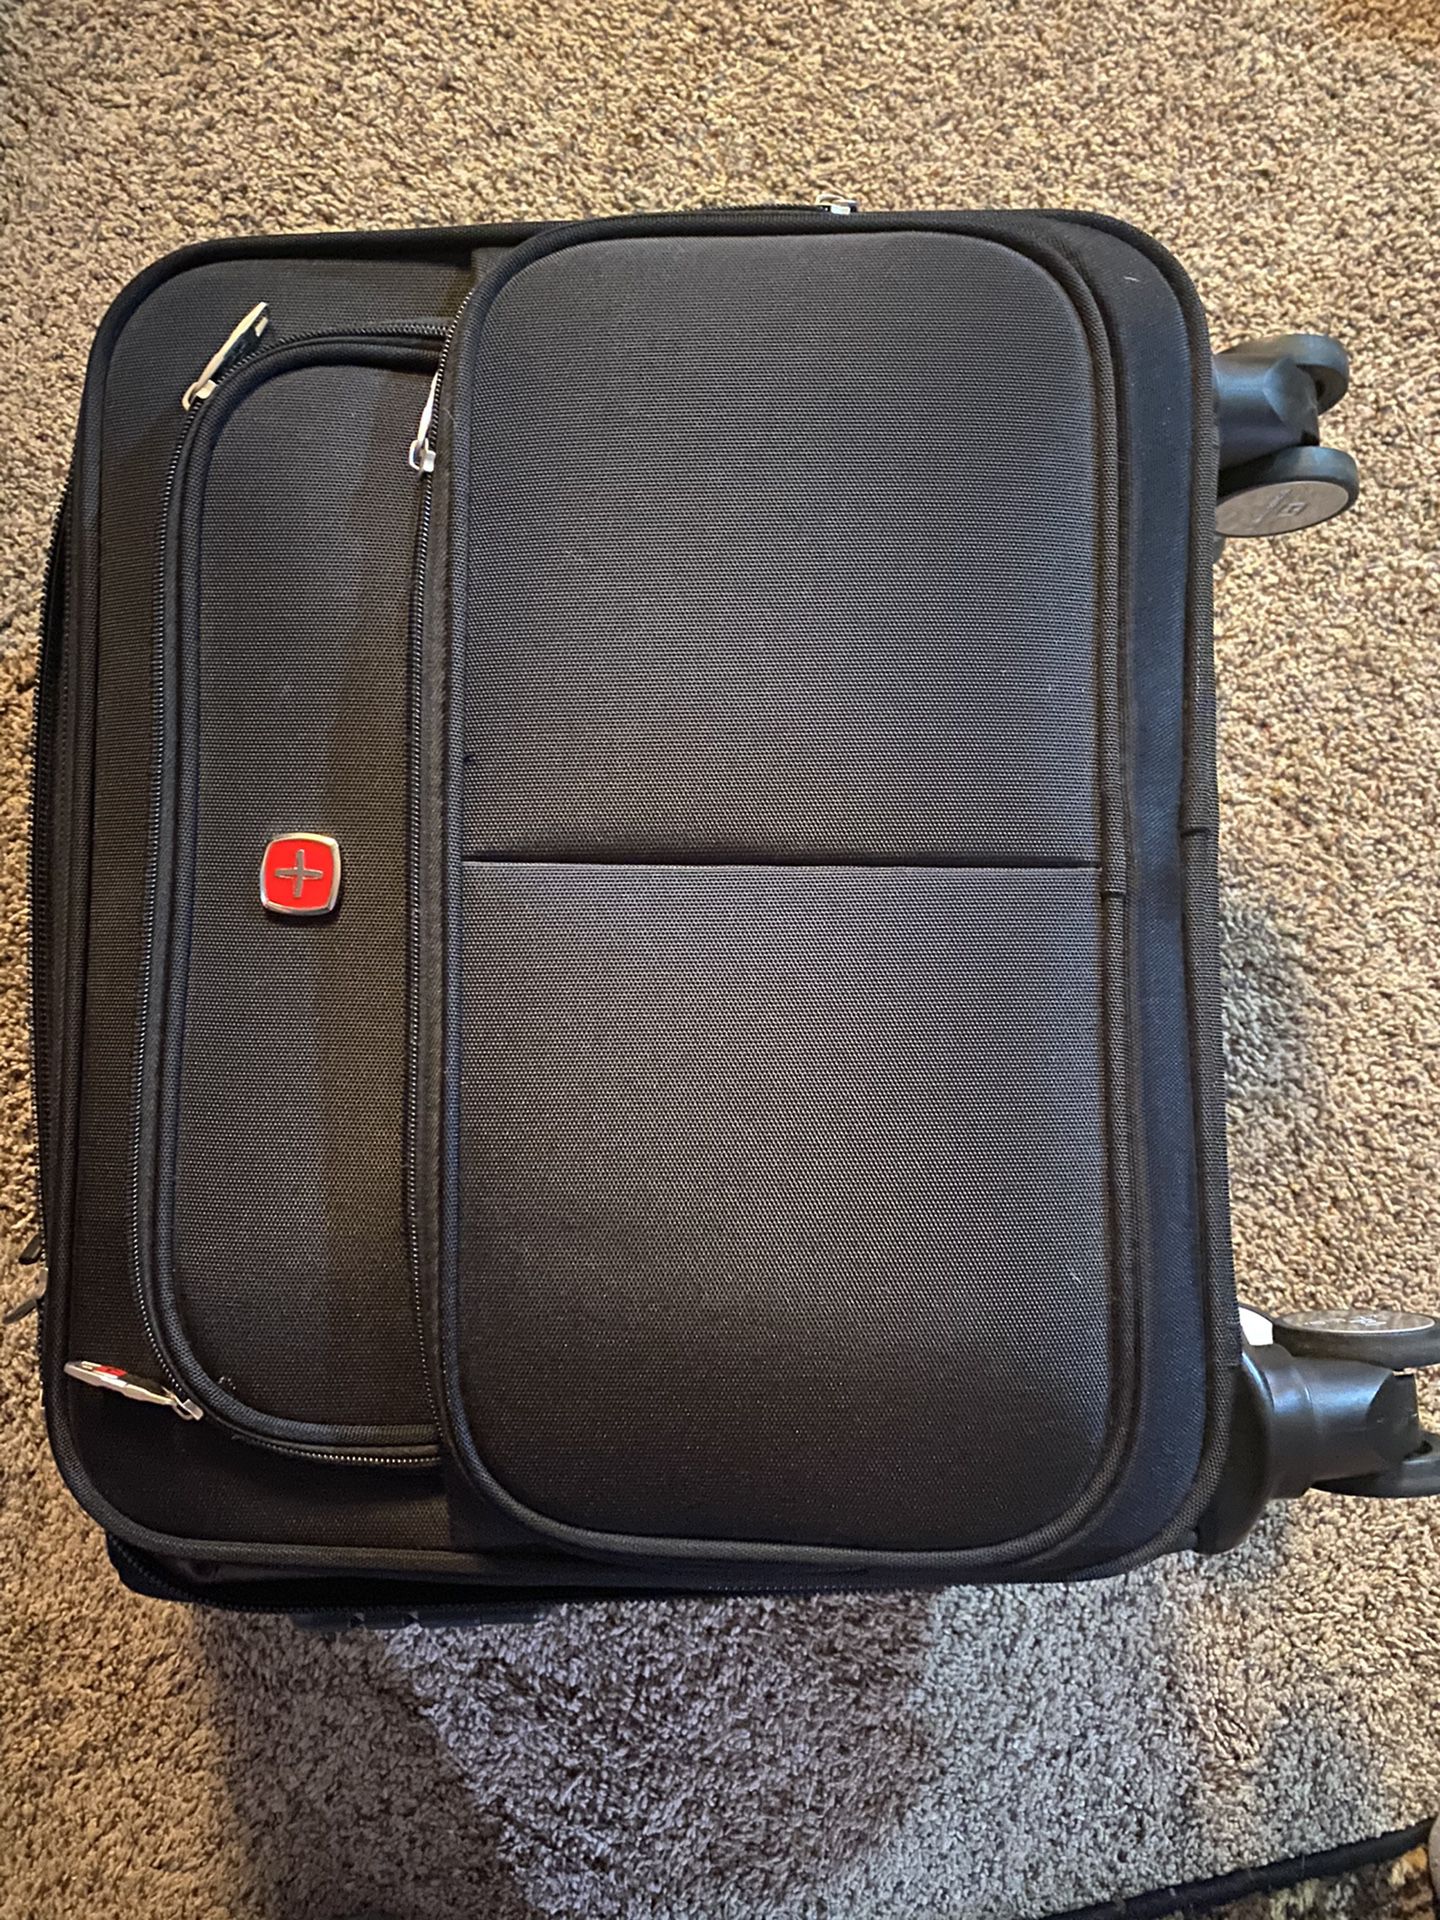 *PRICE DROP!* Carry-On Self-Lock Travel Luggage